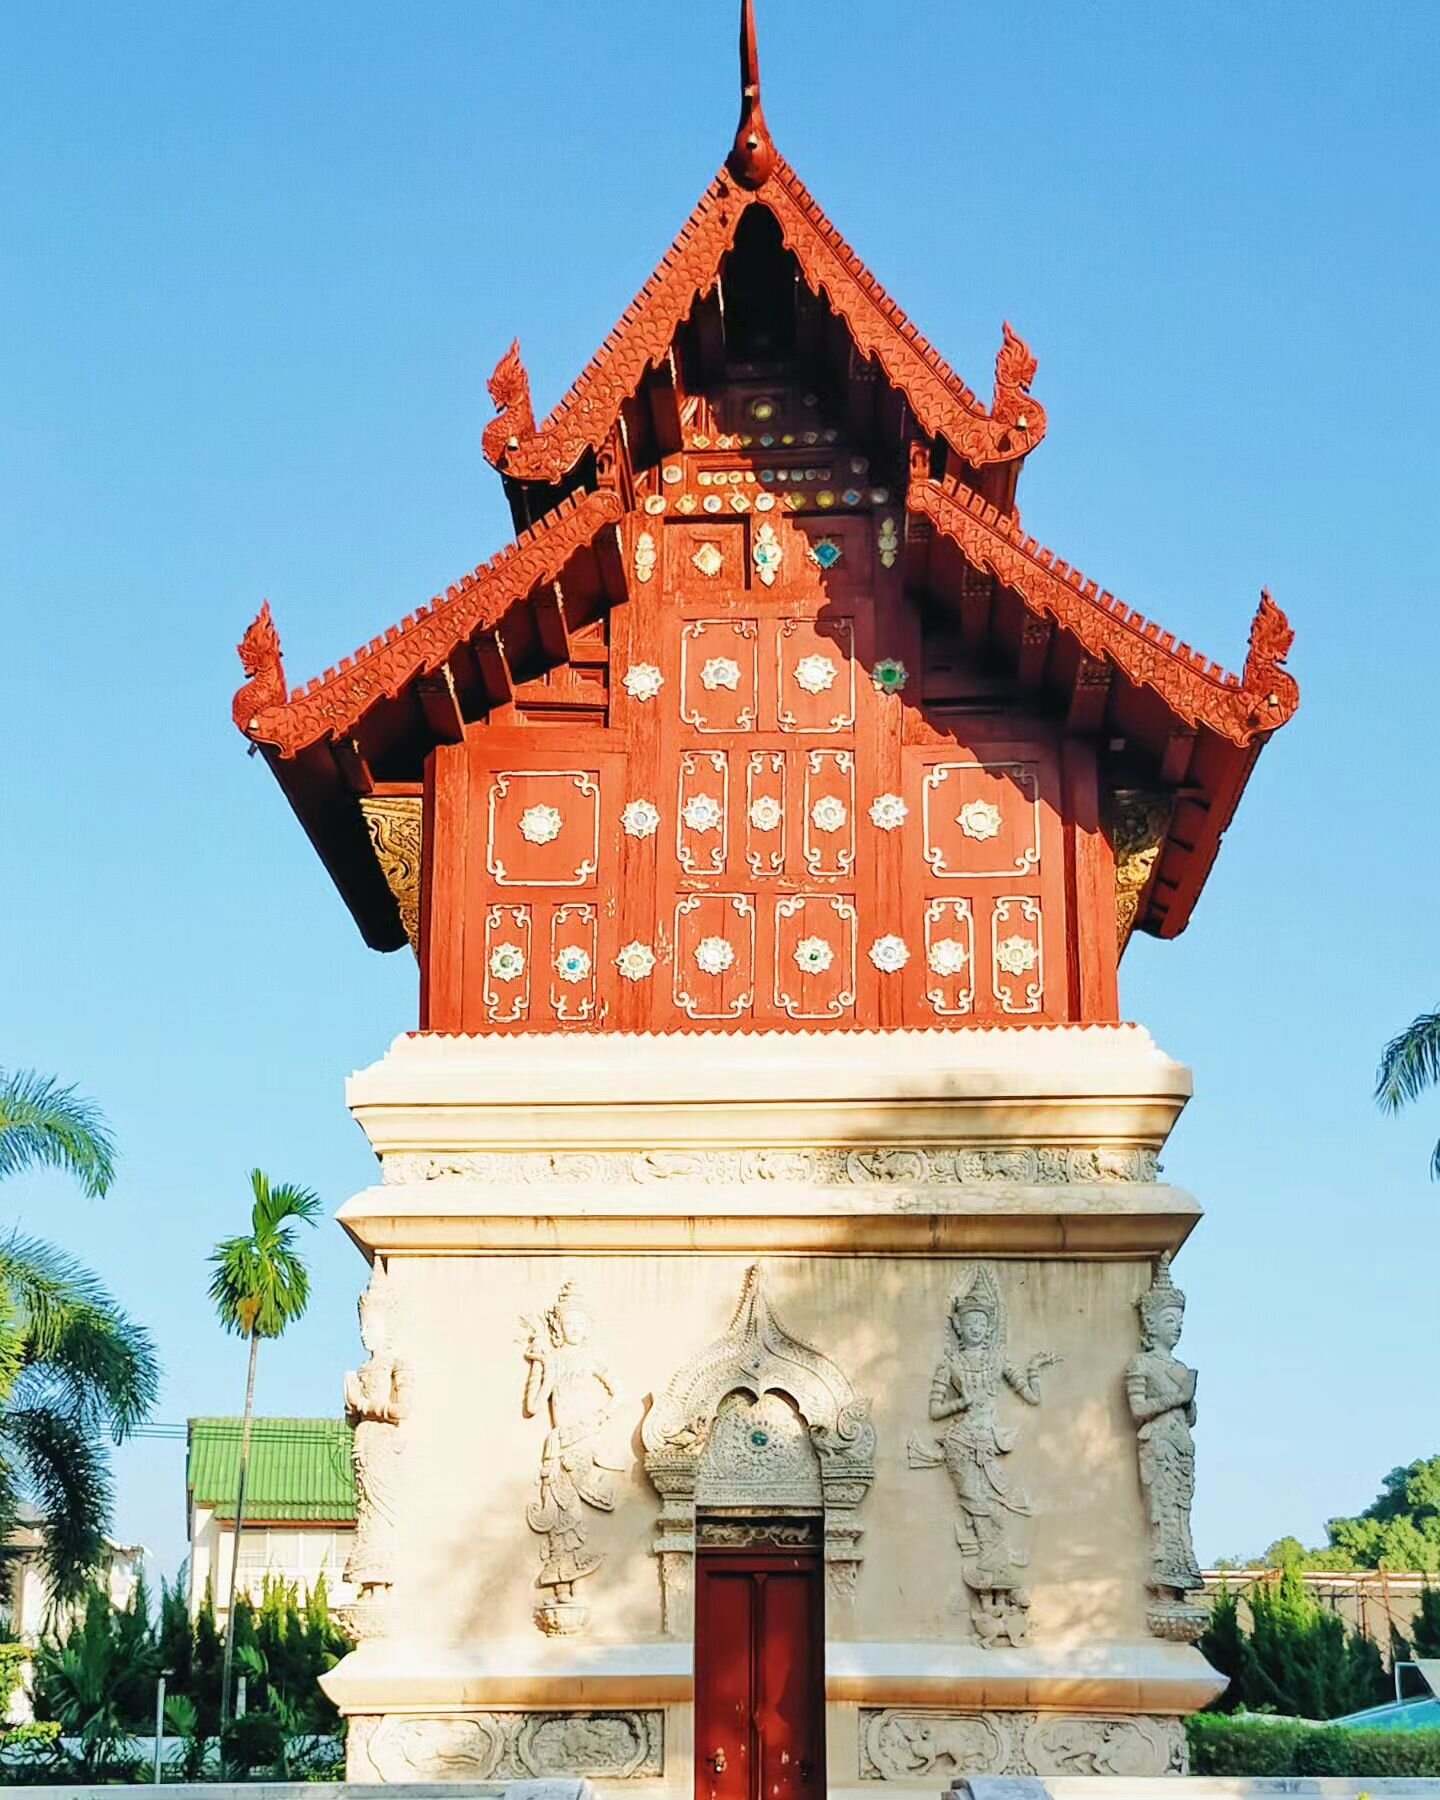 Wat Pra Singh temple complex

Chiang Mai, TH | Nov. 2022